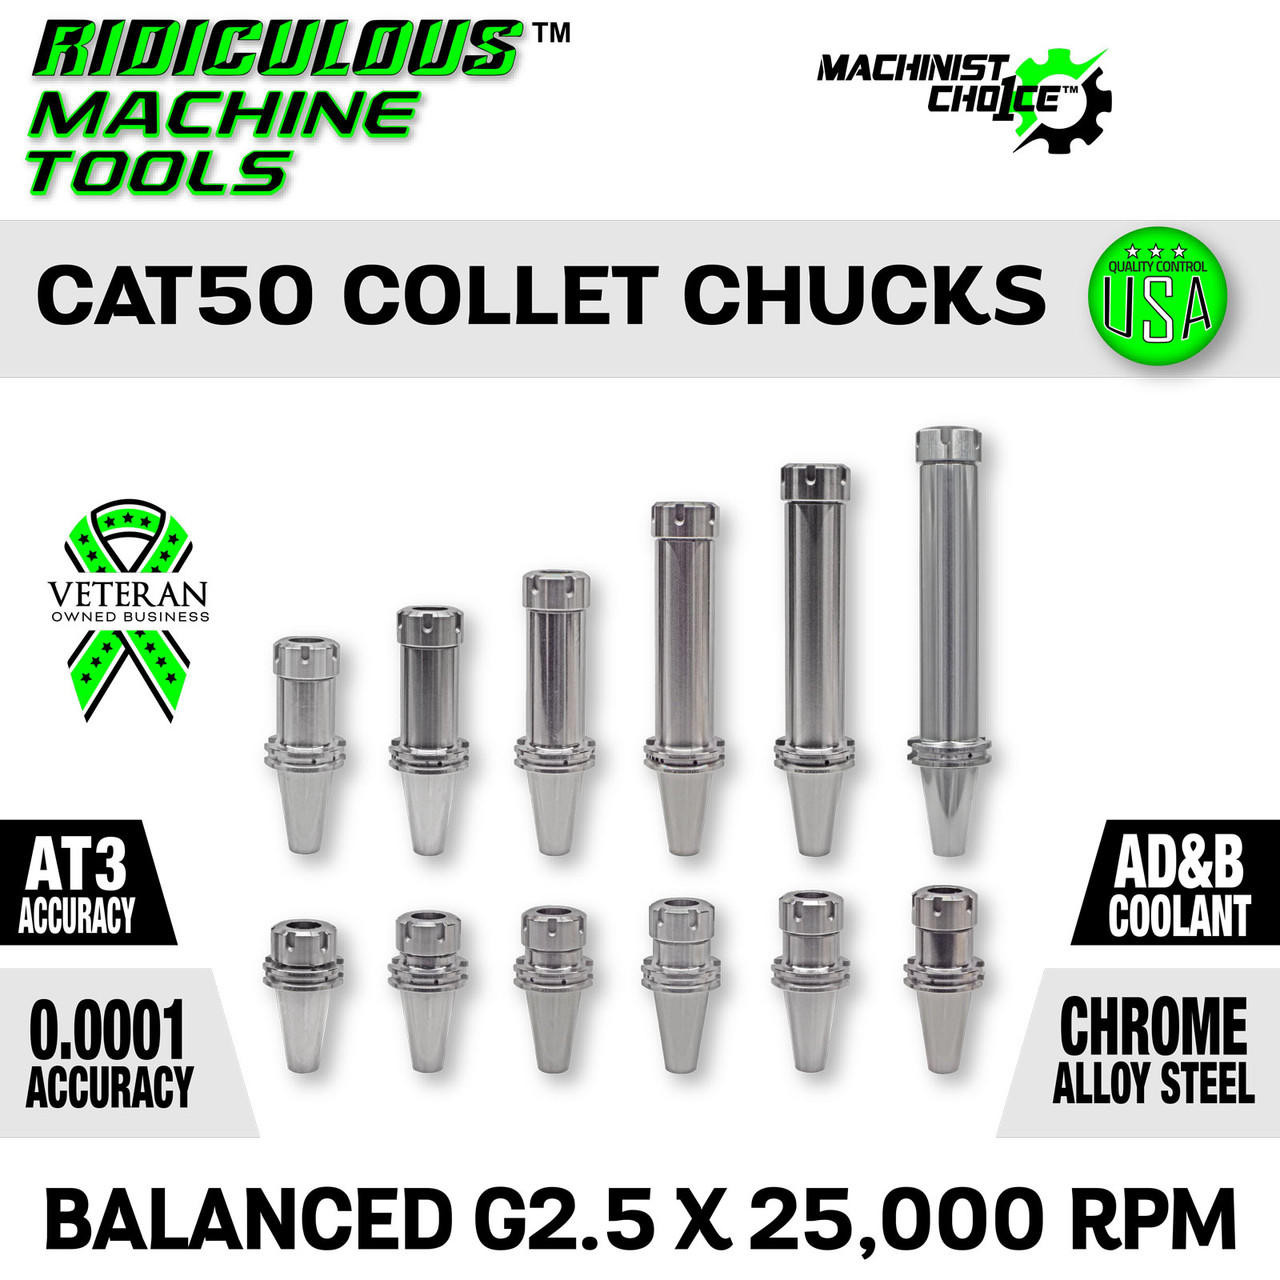 ER 32 CAT50 COLLET CHUCK G2.5 X 25,000 RPM (0.0001 T.I.R.)Machinist Choice™